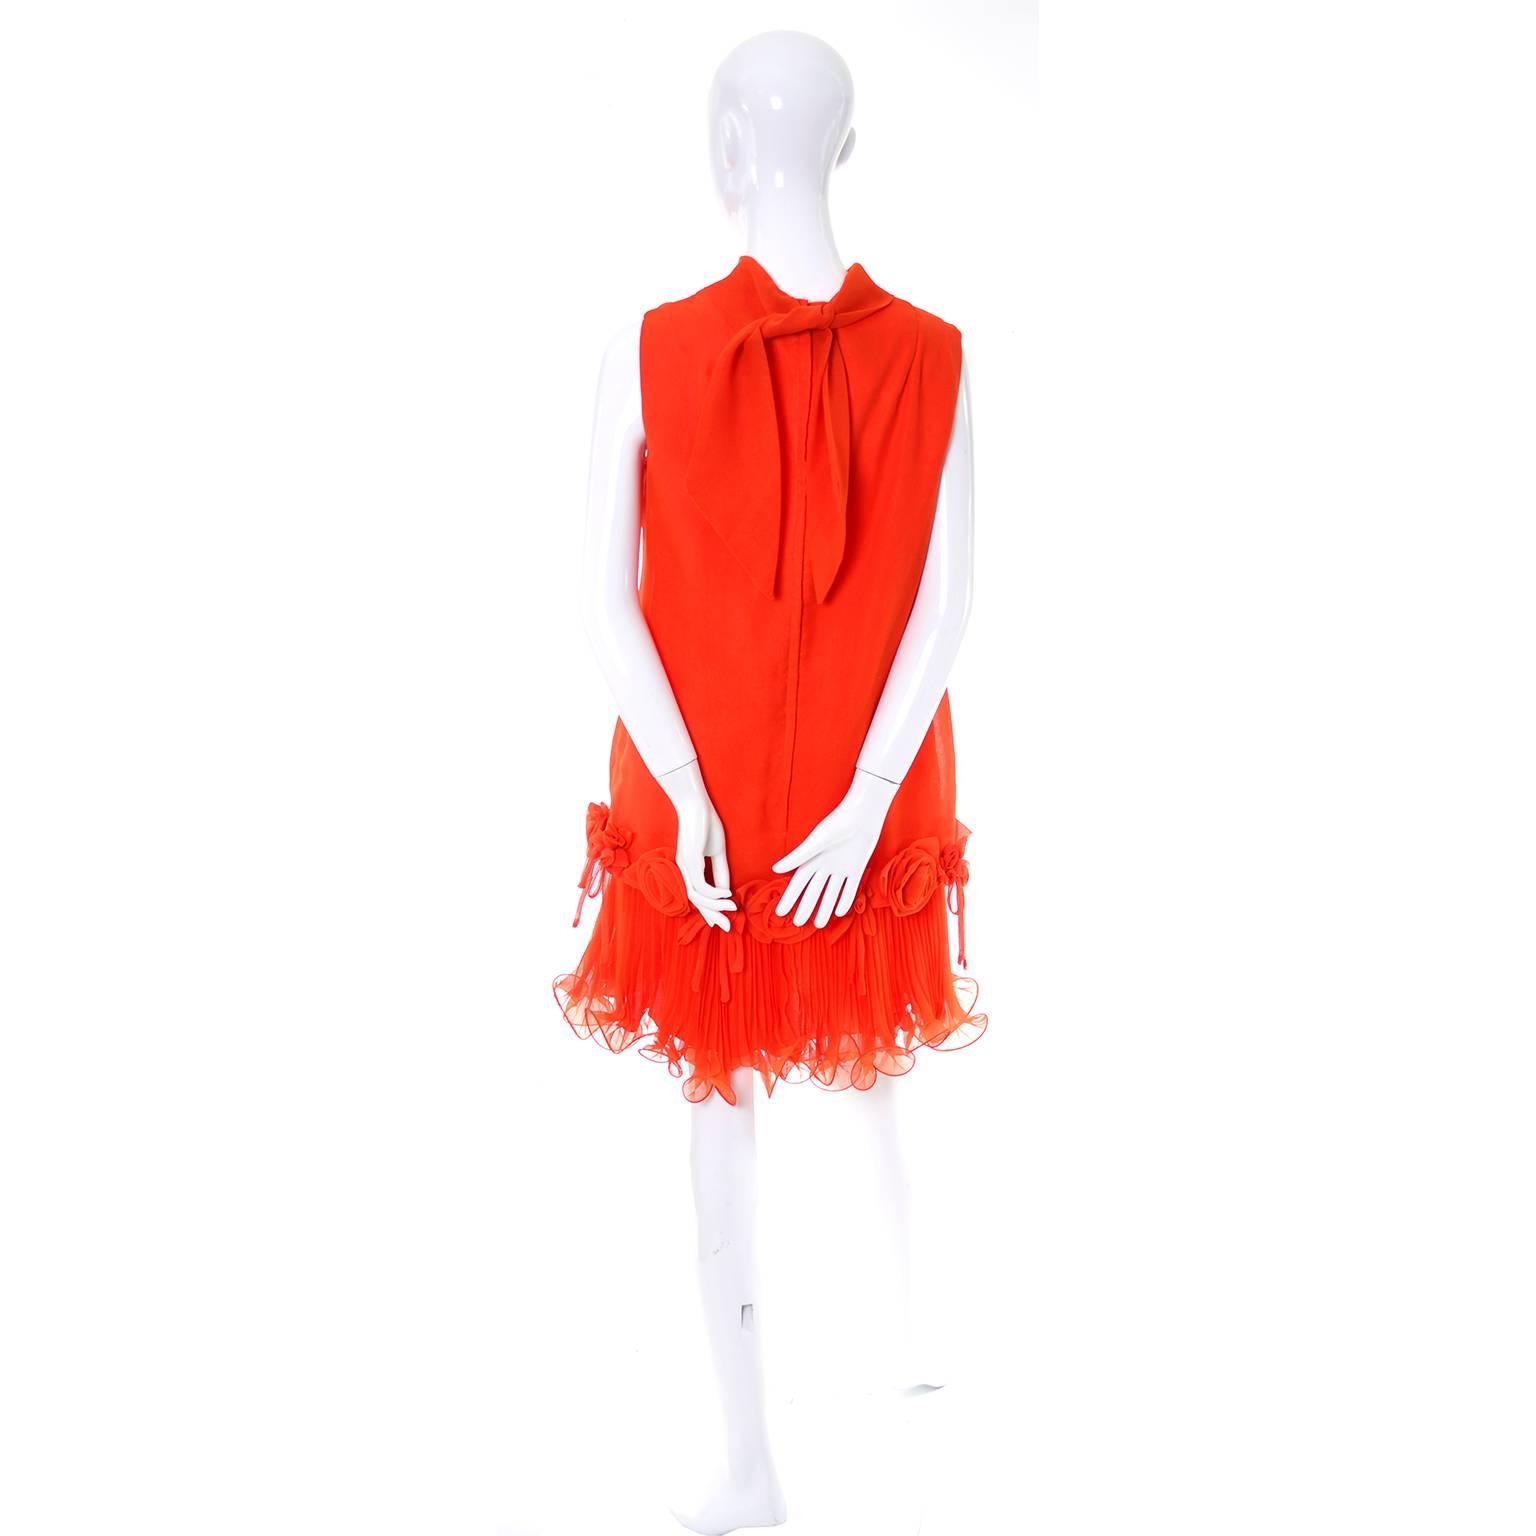 Women's New Dupuis Jack Bryan Vintage Dress Dead Stock W/ Tags Tomato Red Chiffon 1960s